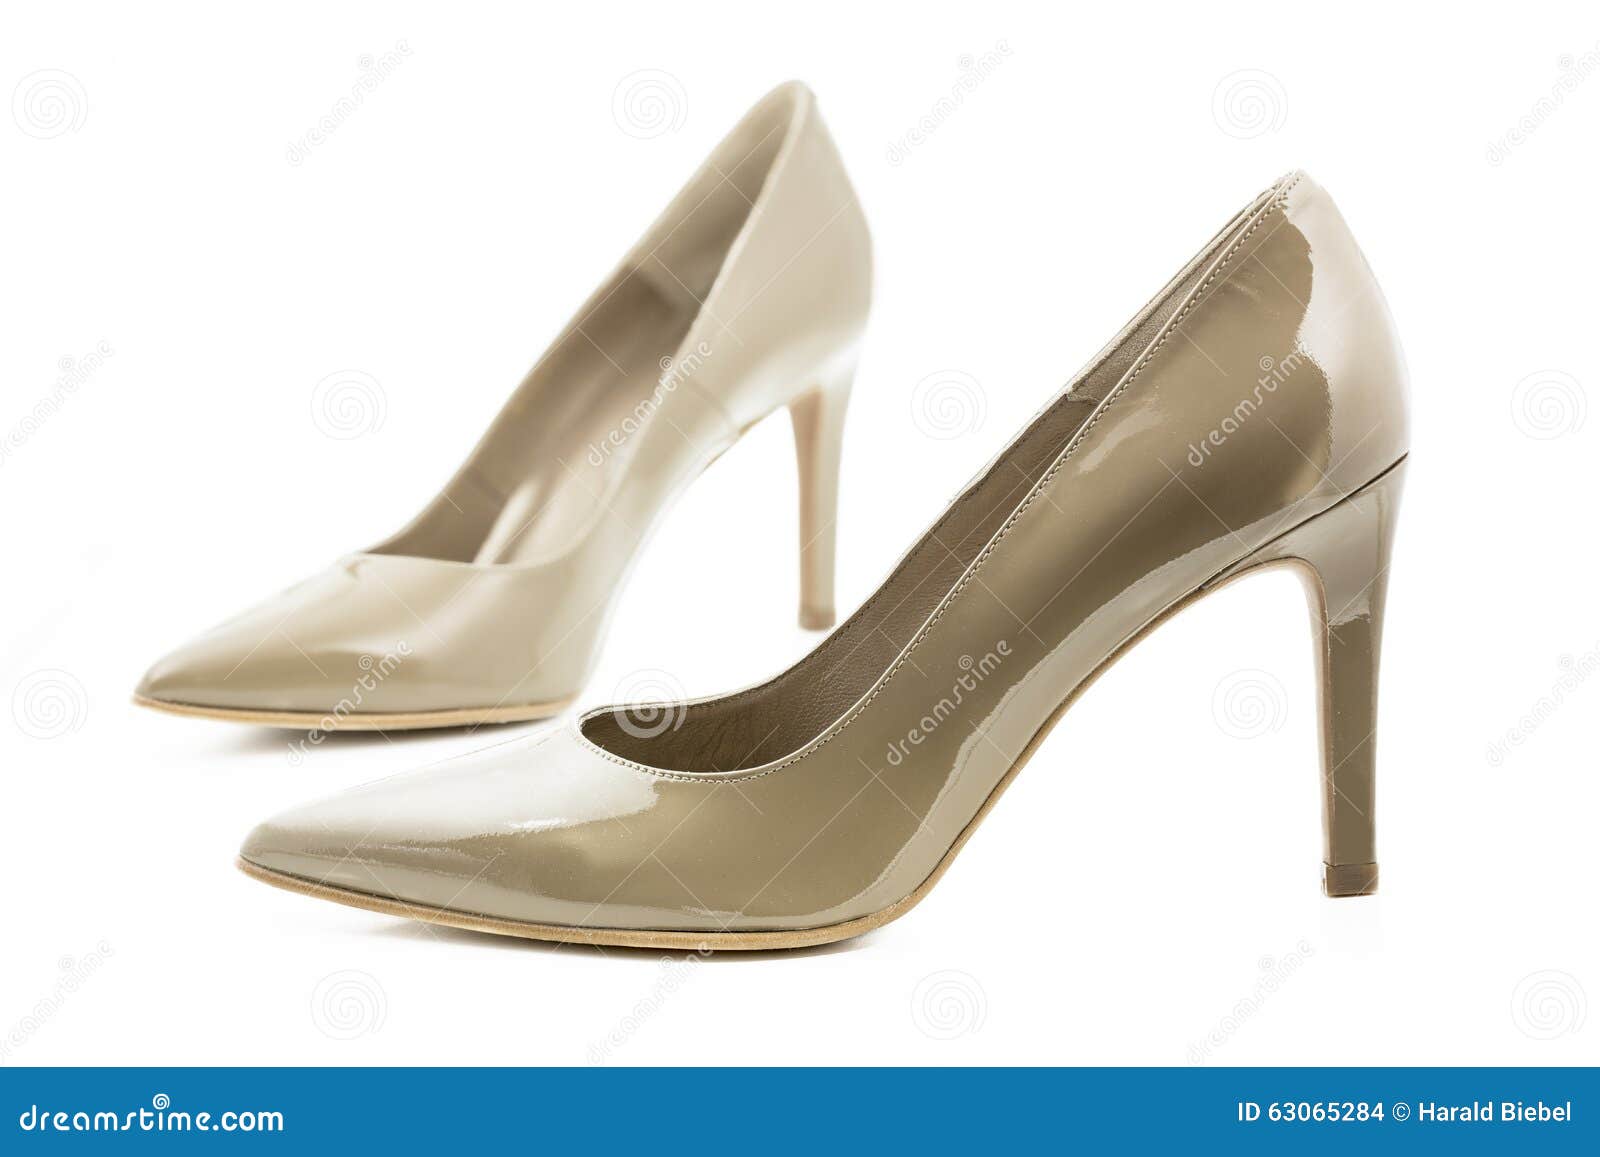 High Heels Isolated on White Background Stock Photo - Image of ...